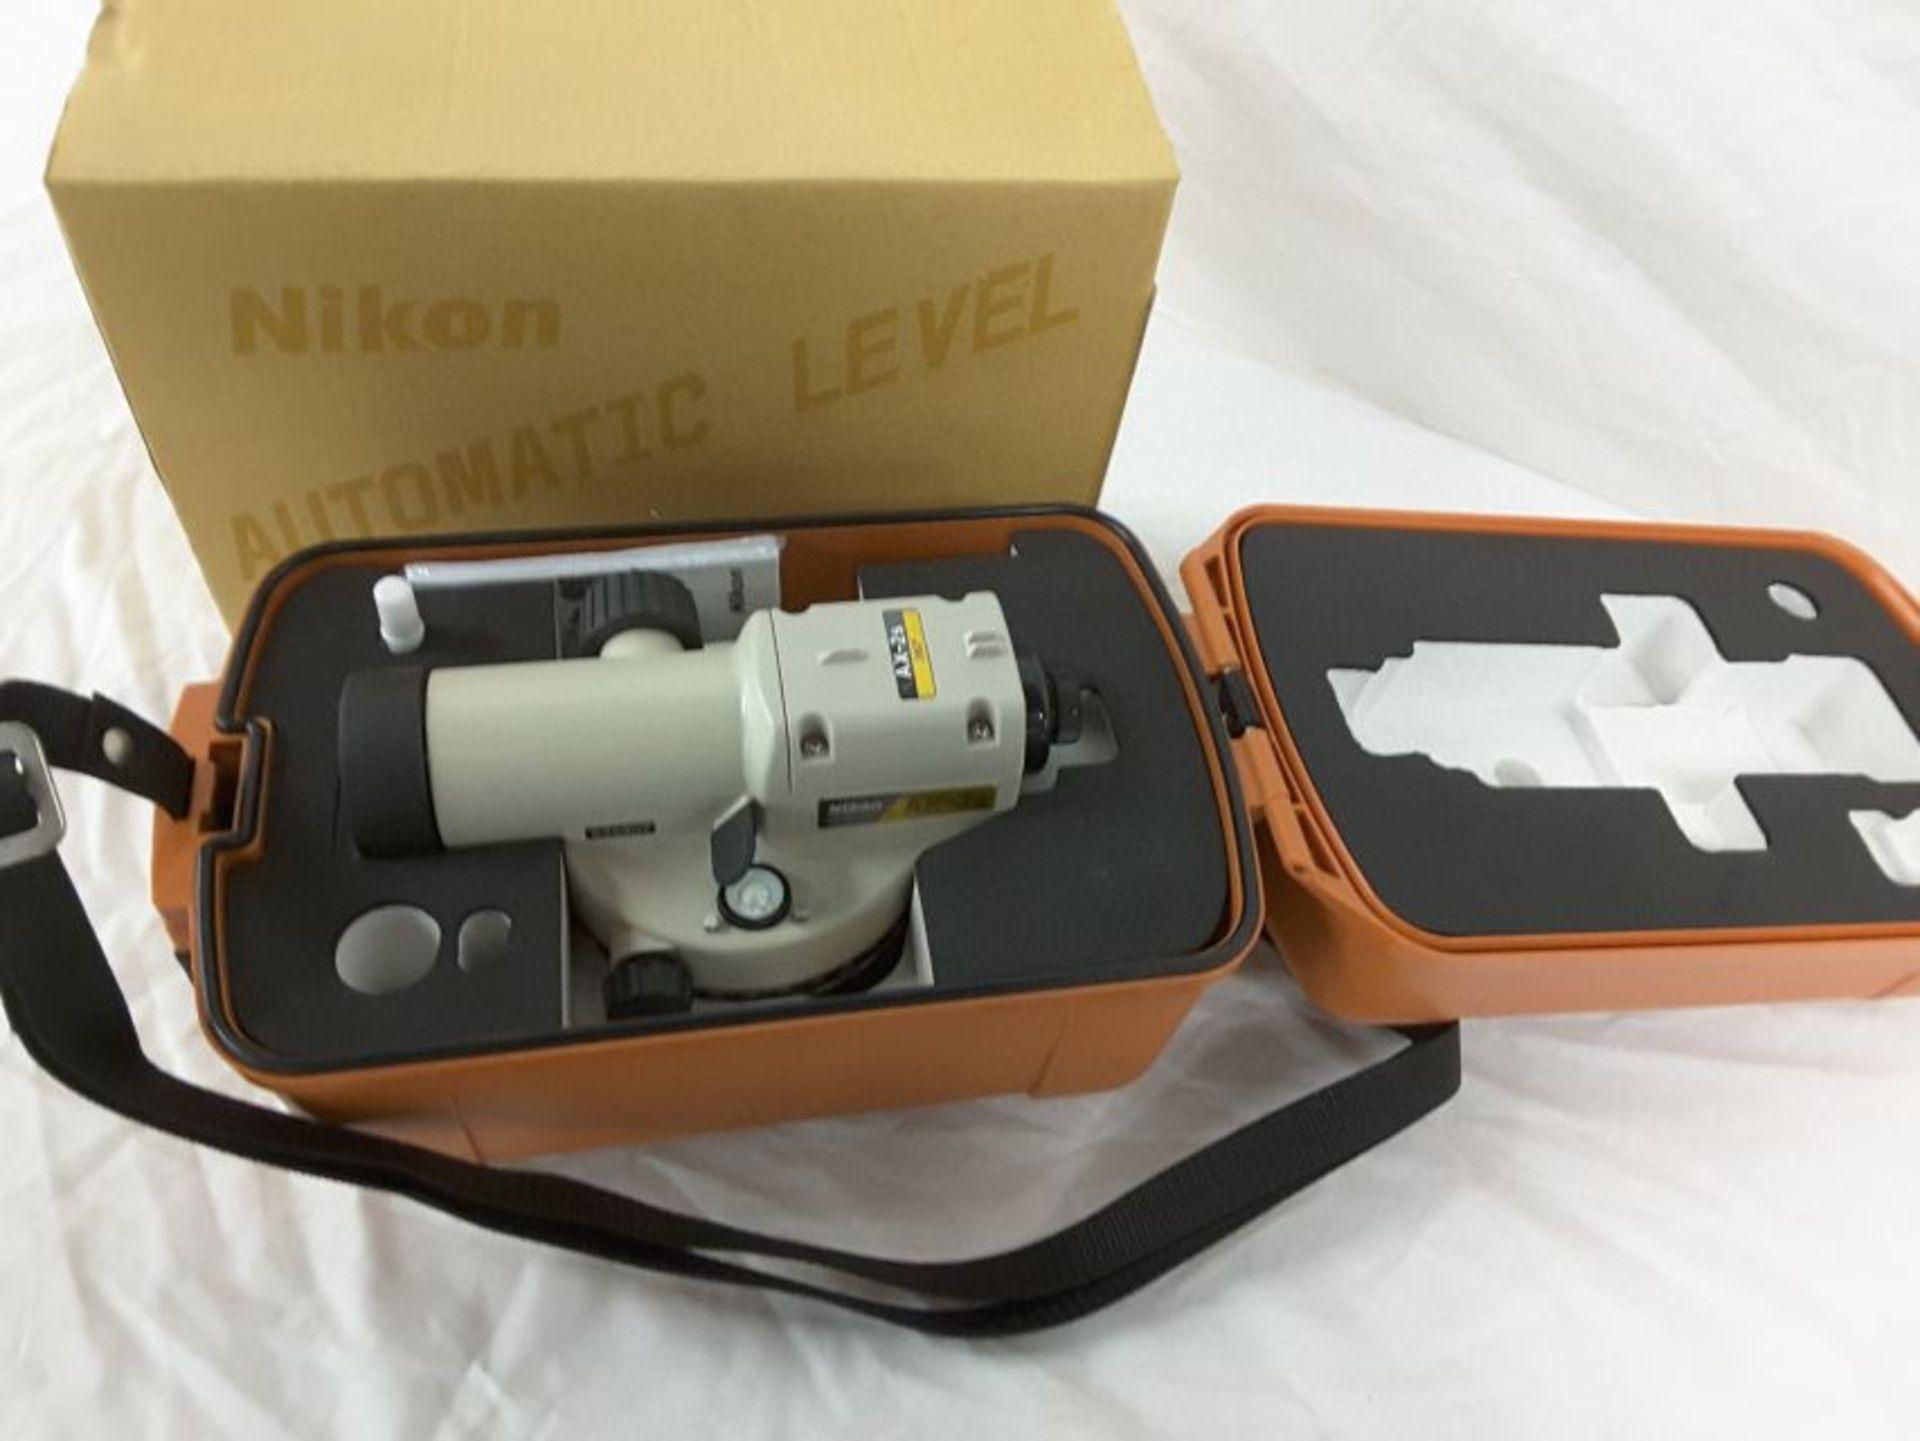 Nikon automatic level model ALAX 2S